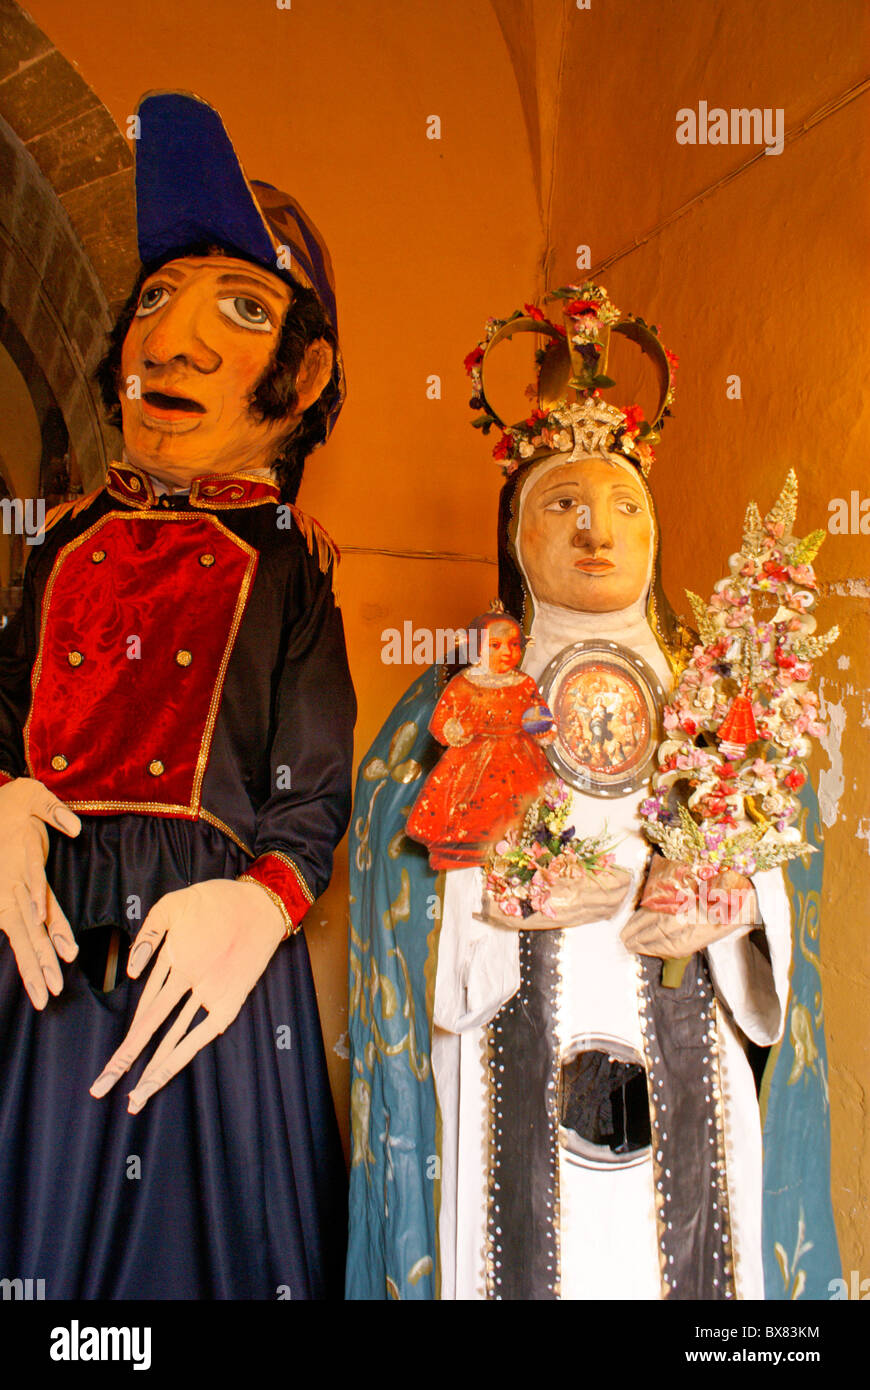 Mojigangas,giant papier mache puppets in the Bellas Artes, San Miguel de Allende, Mexico. Stock Photo